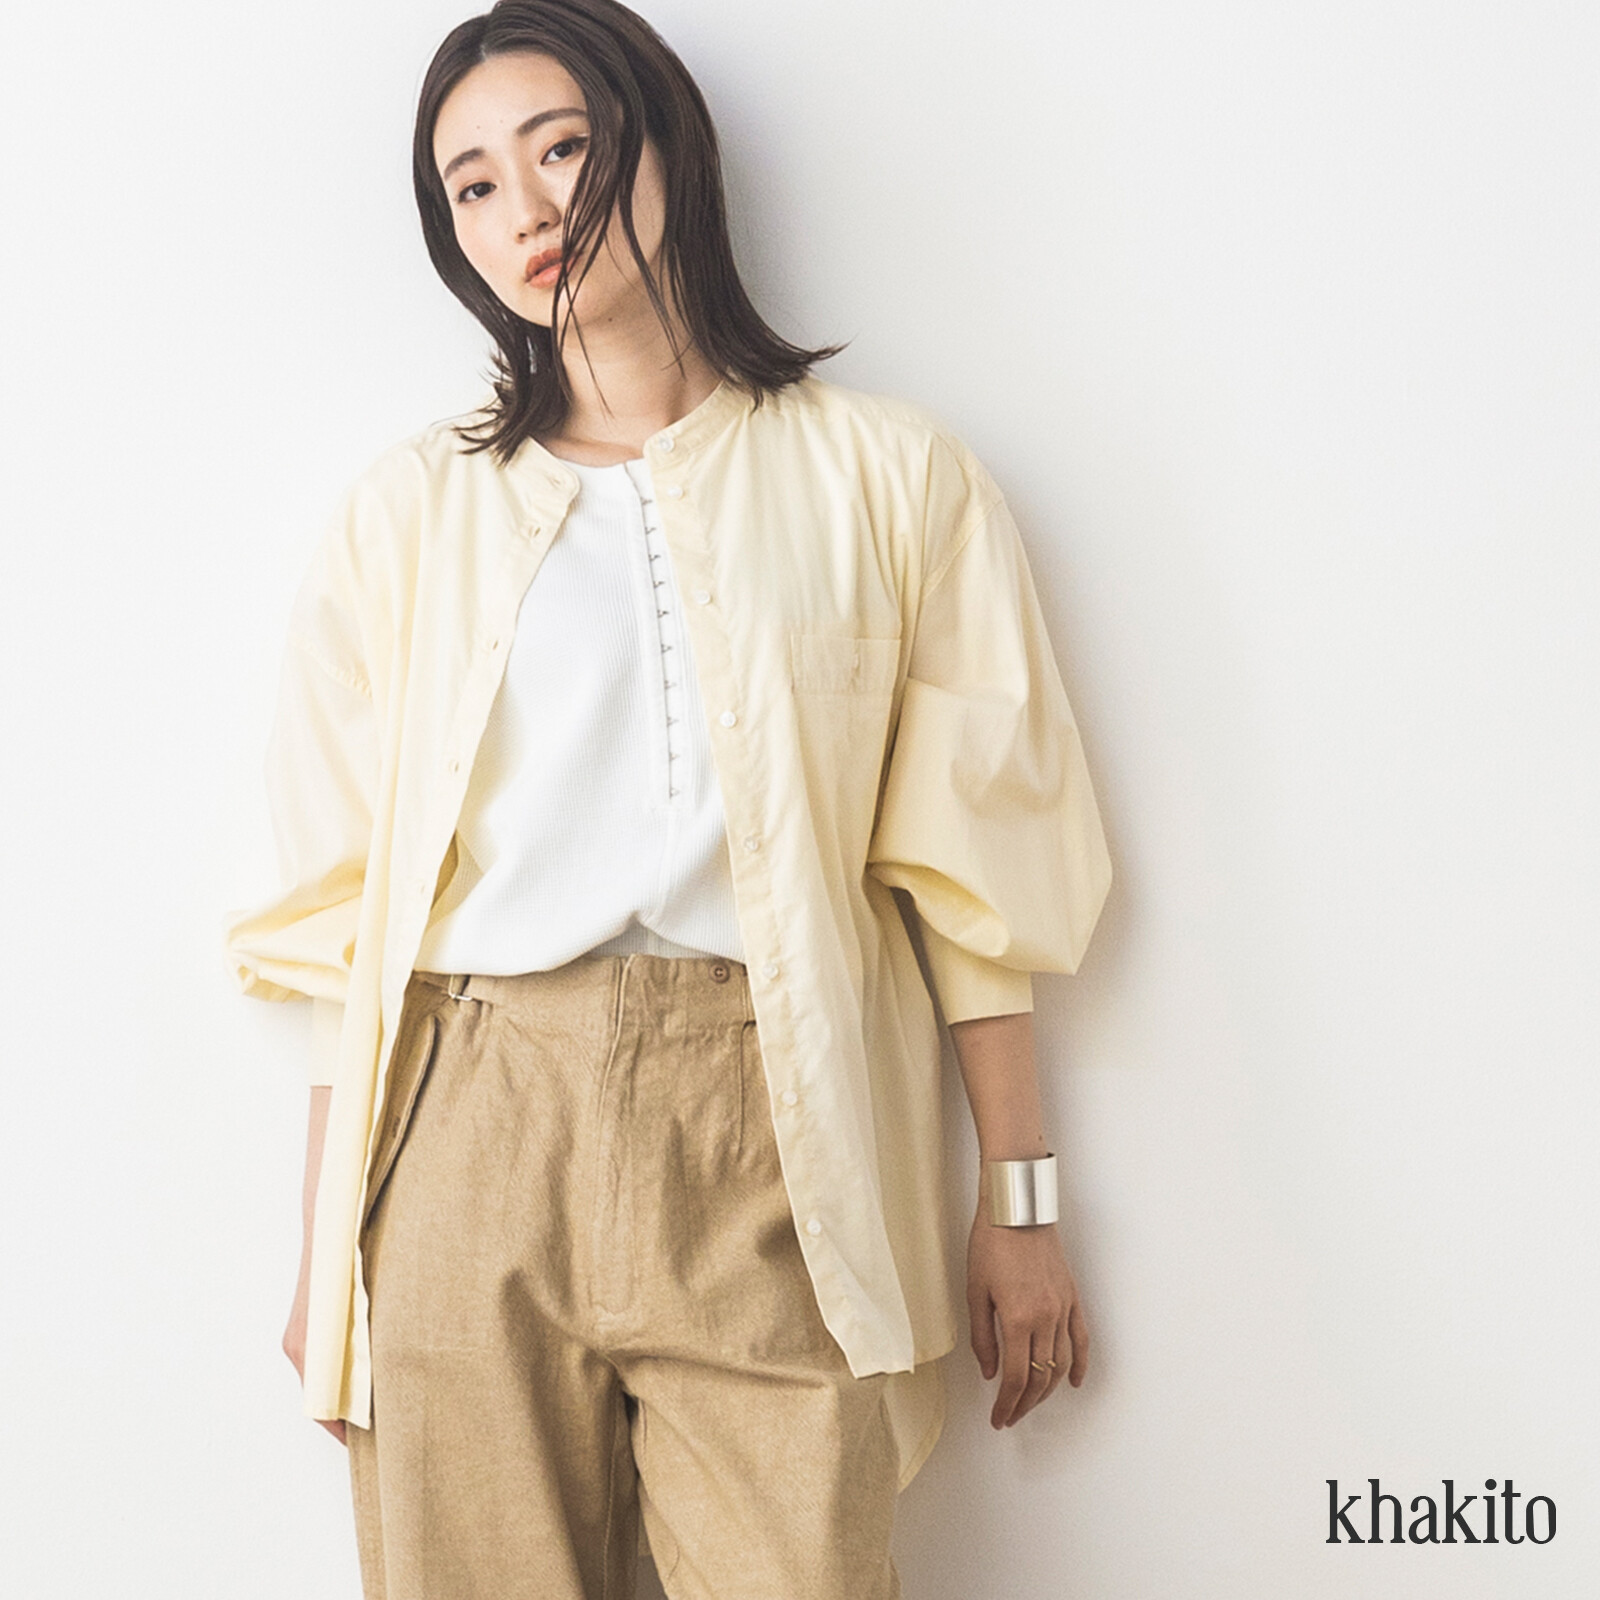 khakito  :  프렌치 아미 워크 셔츠 모티브 드레스 셔츠 (2컬러)